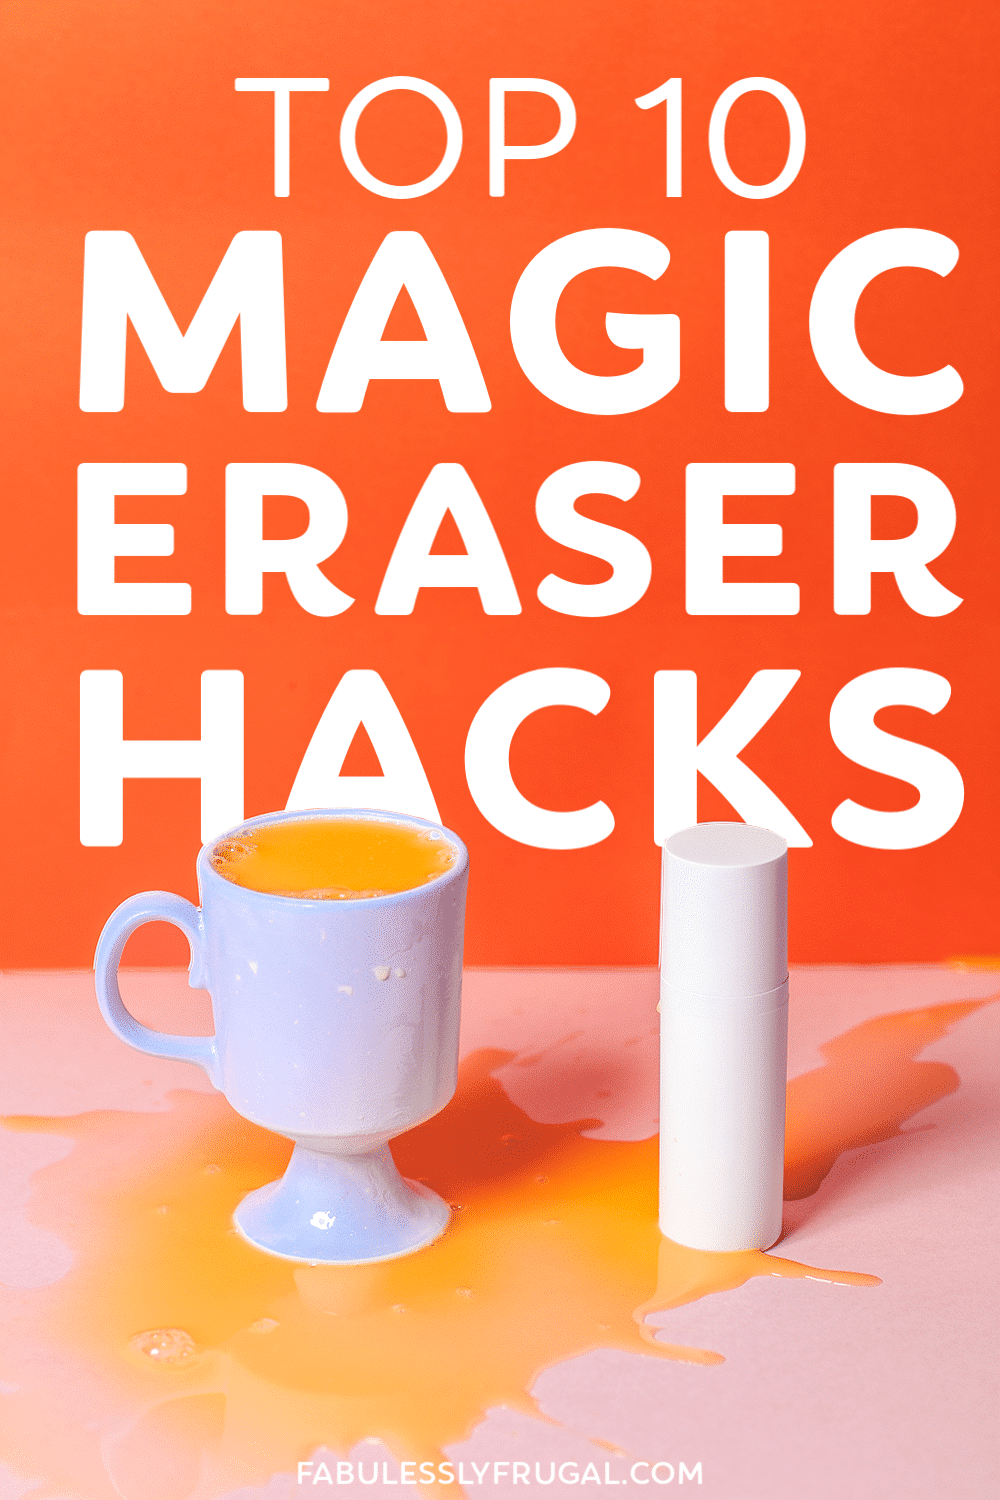 Magic eraser hacks